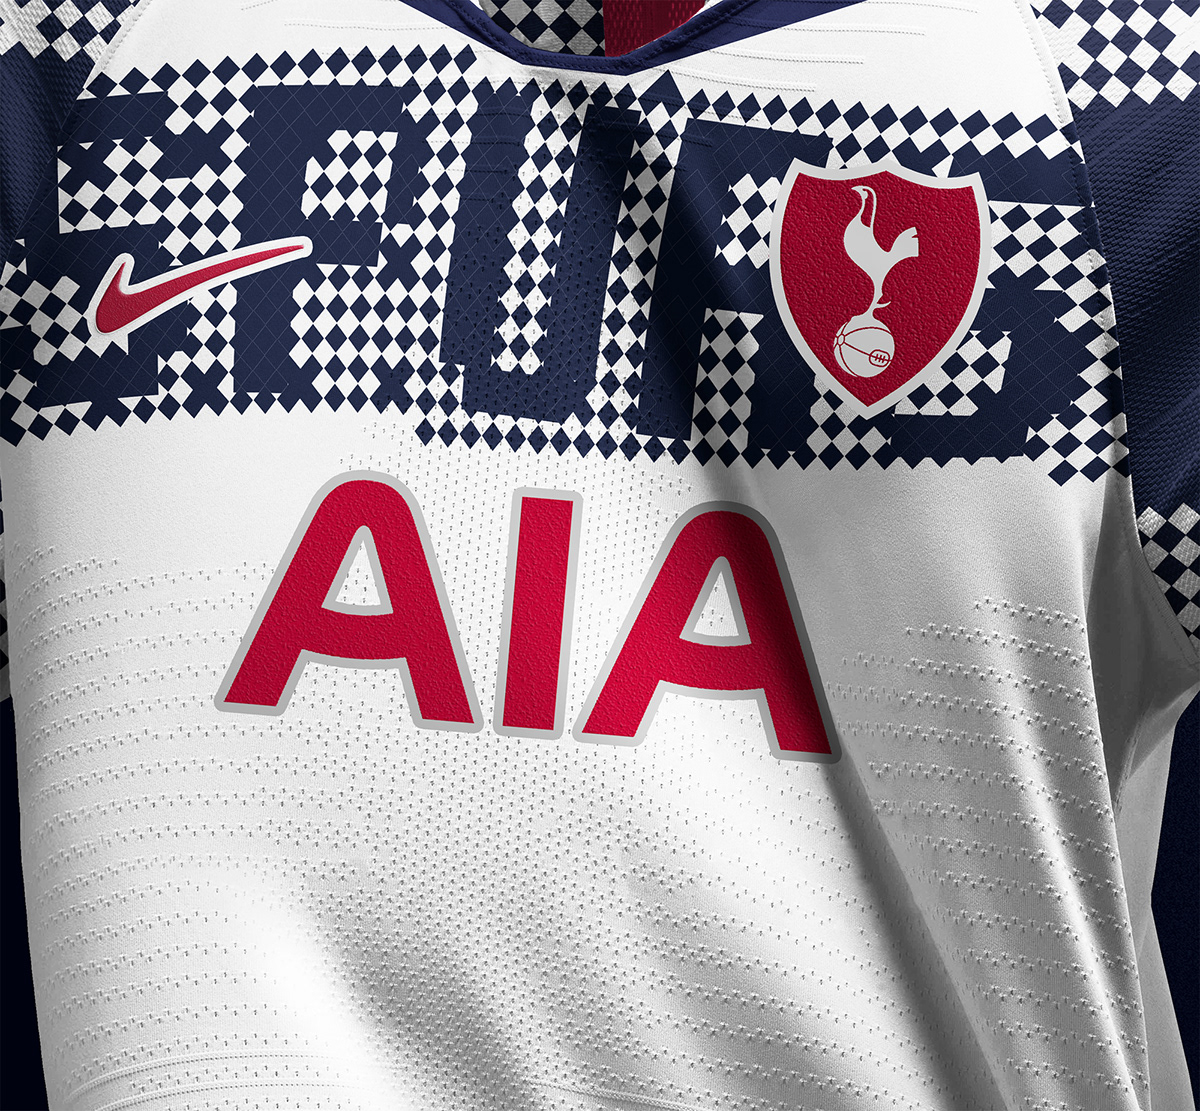 2016 Tottenham Hotspur Kit Concepts on Behance